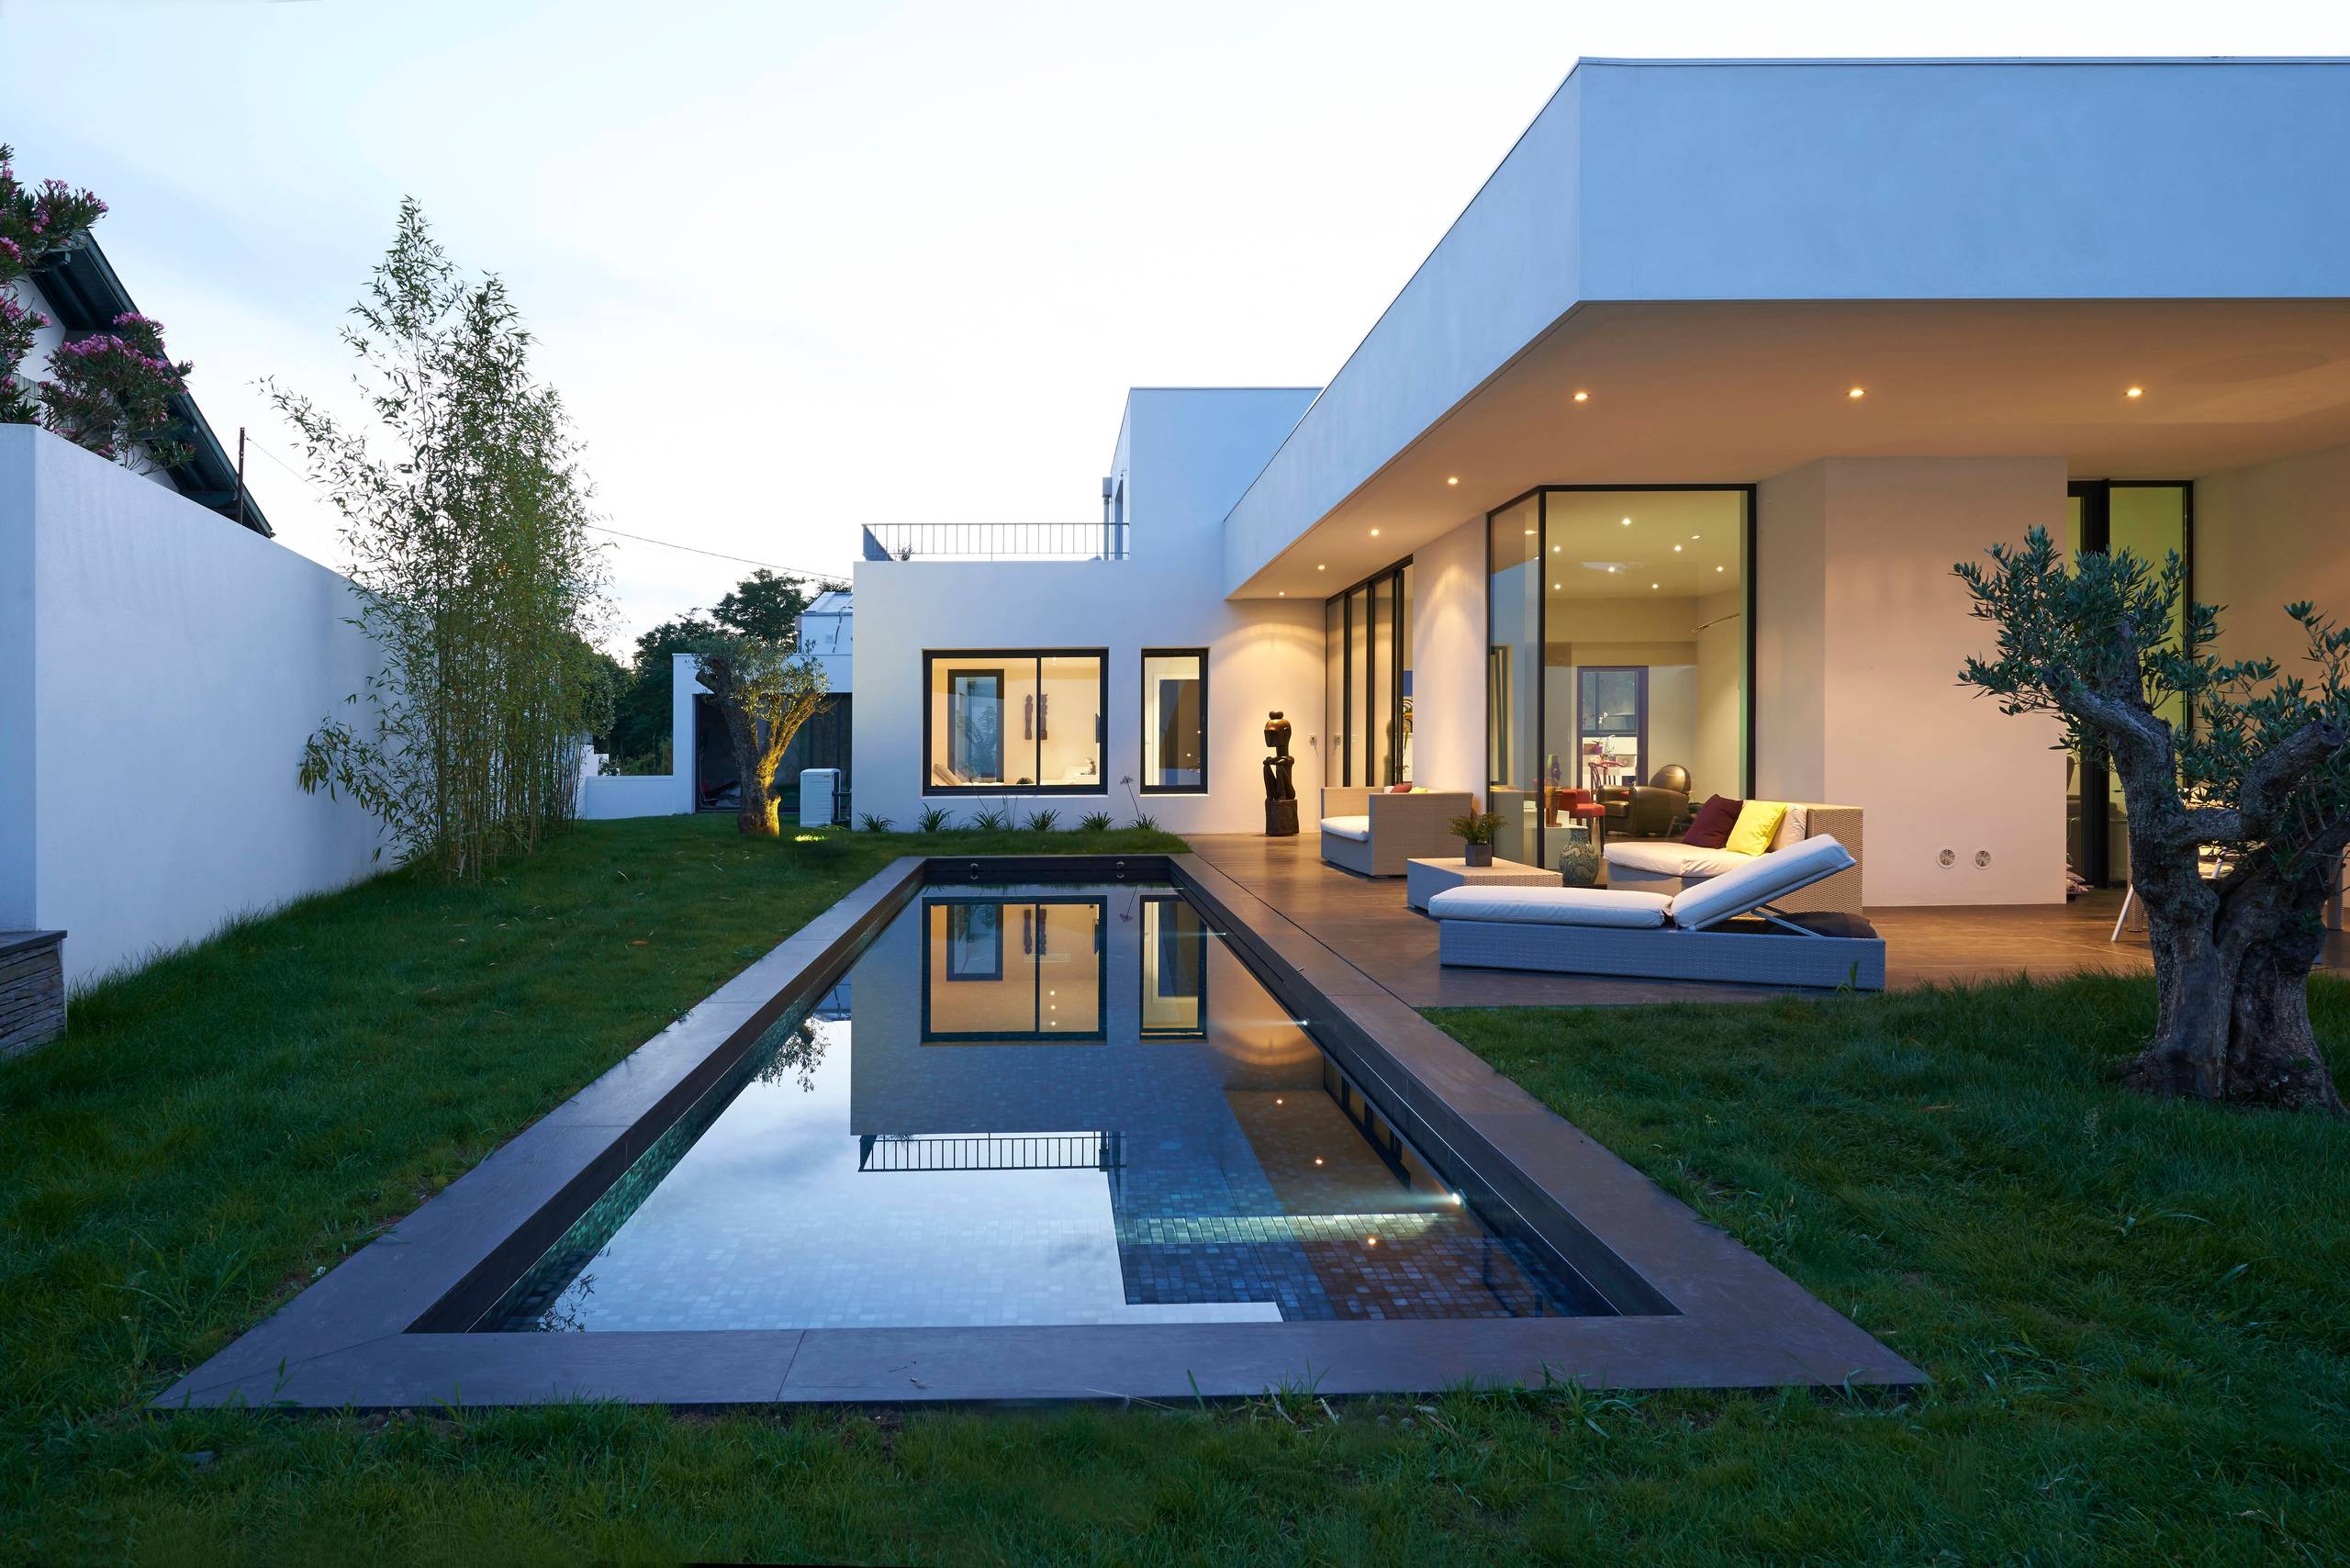 18 Dazzling Modern Swimming Pool Designs - The Ultimate Backyard